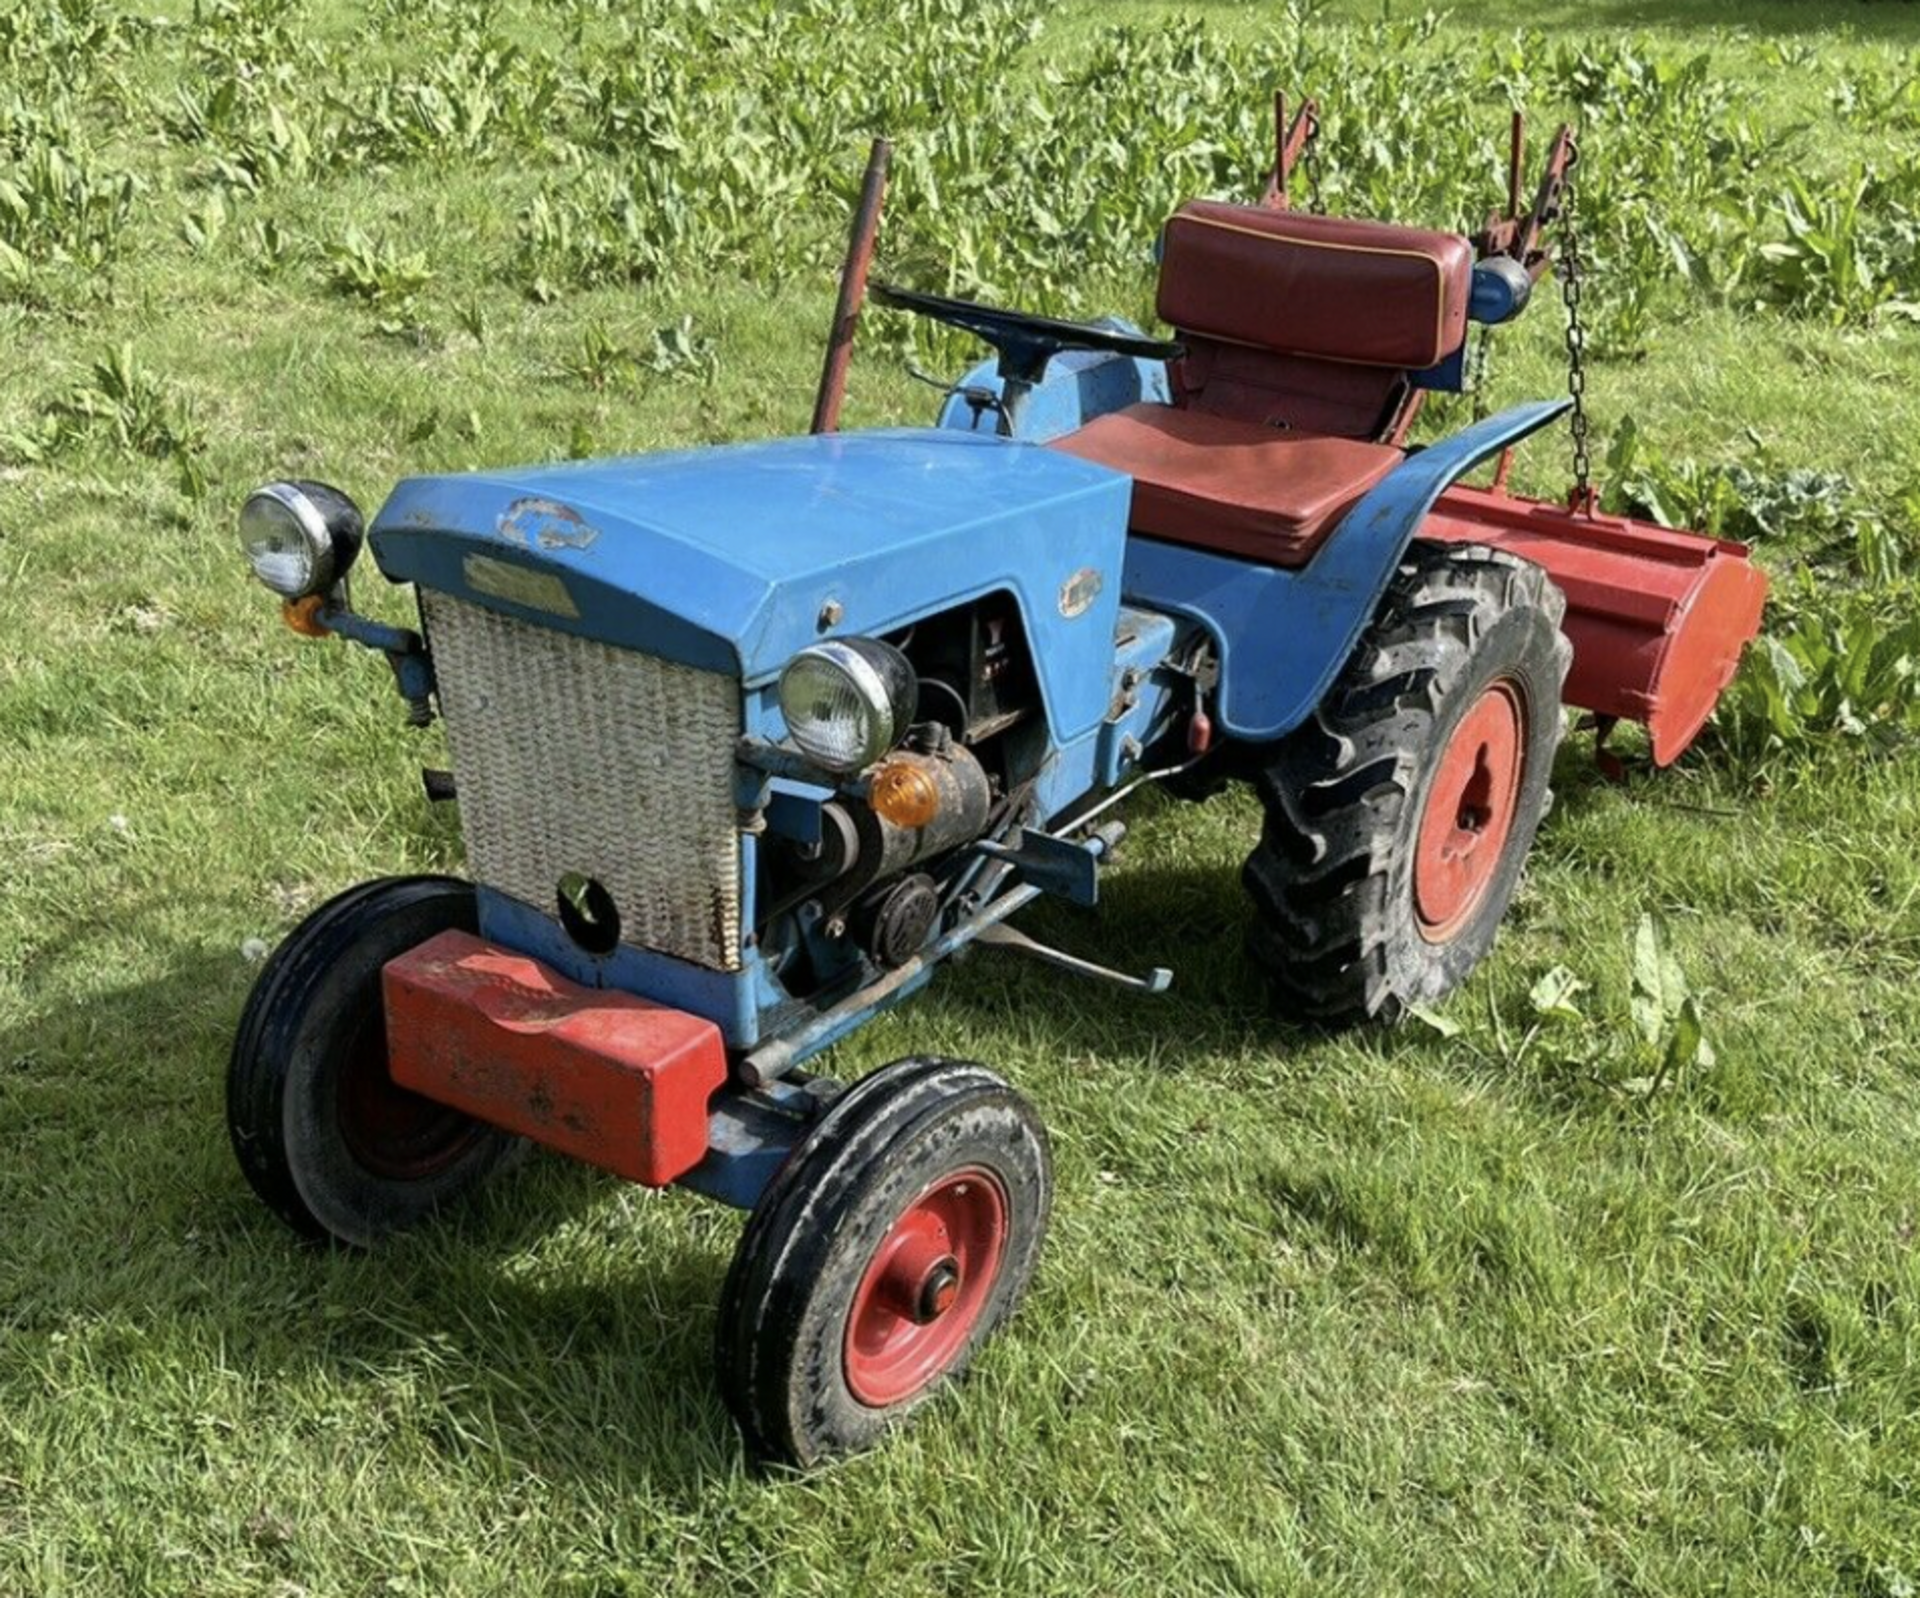 Gutbrod tractor and rotavator - Bild 4 aus 10